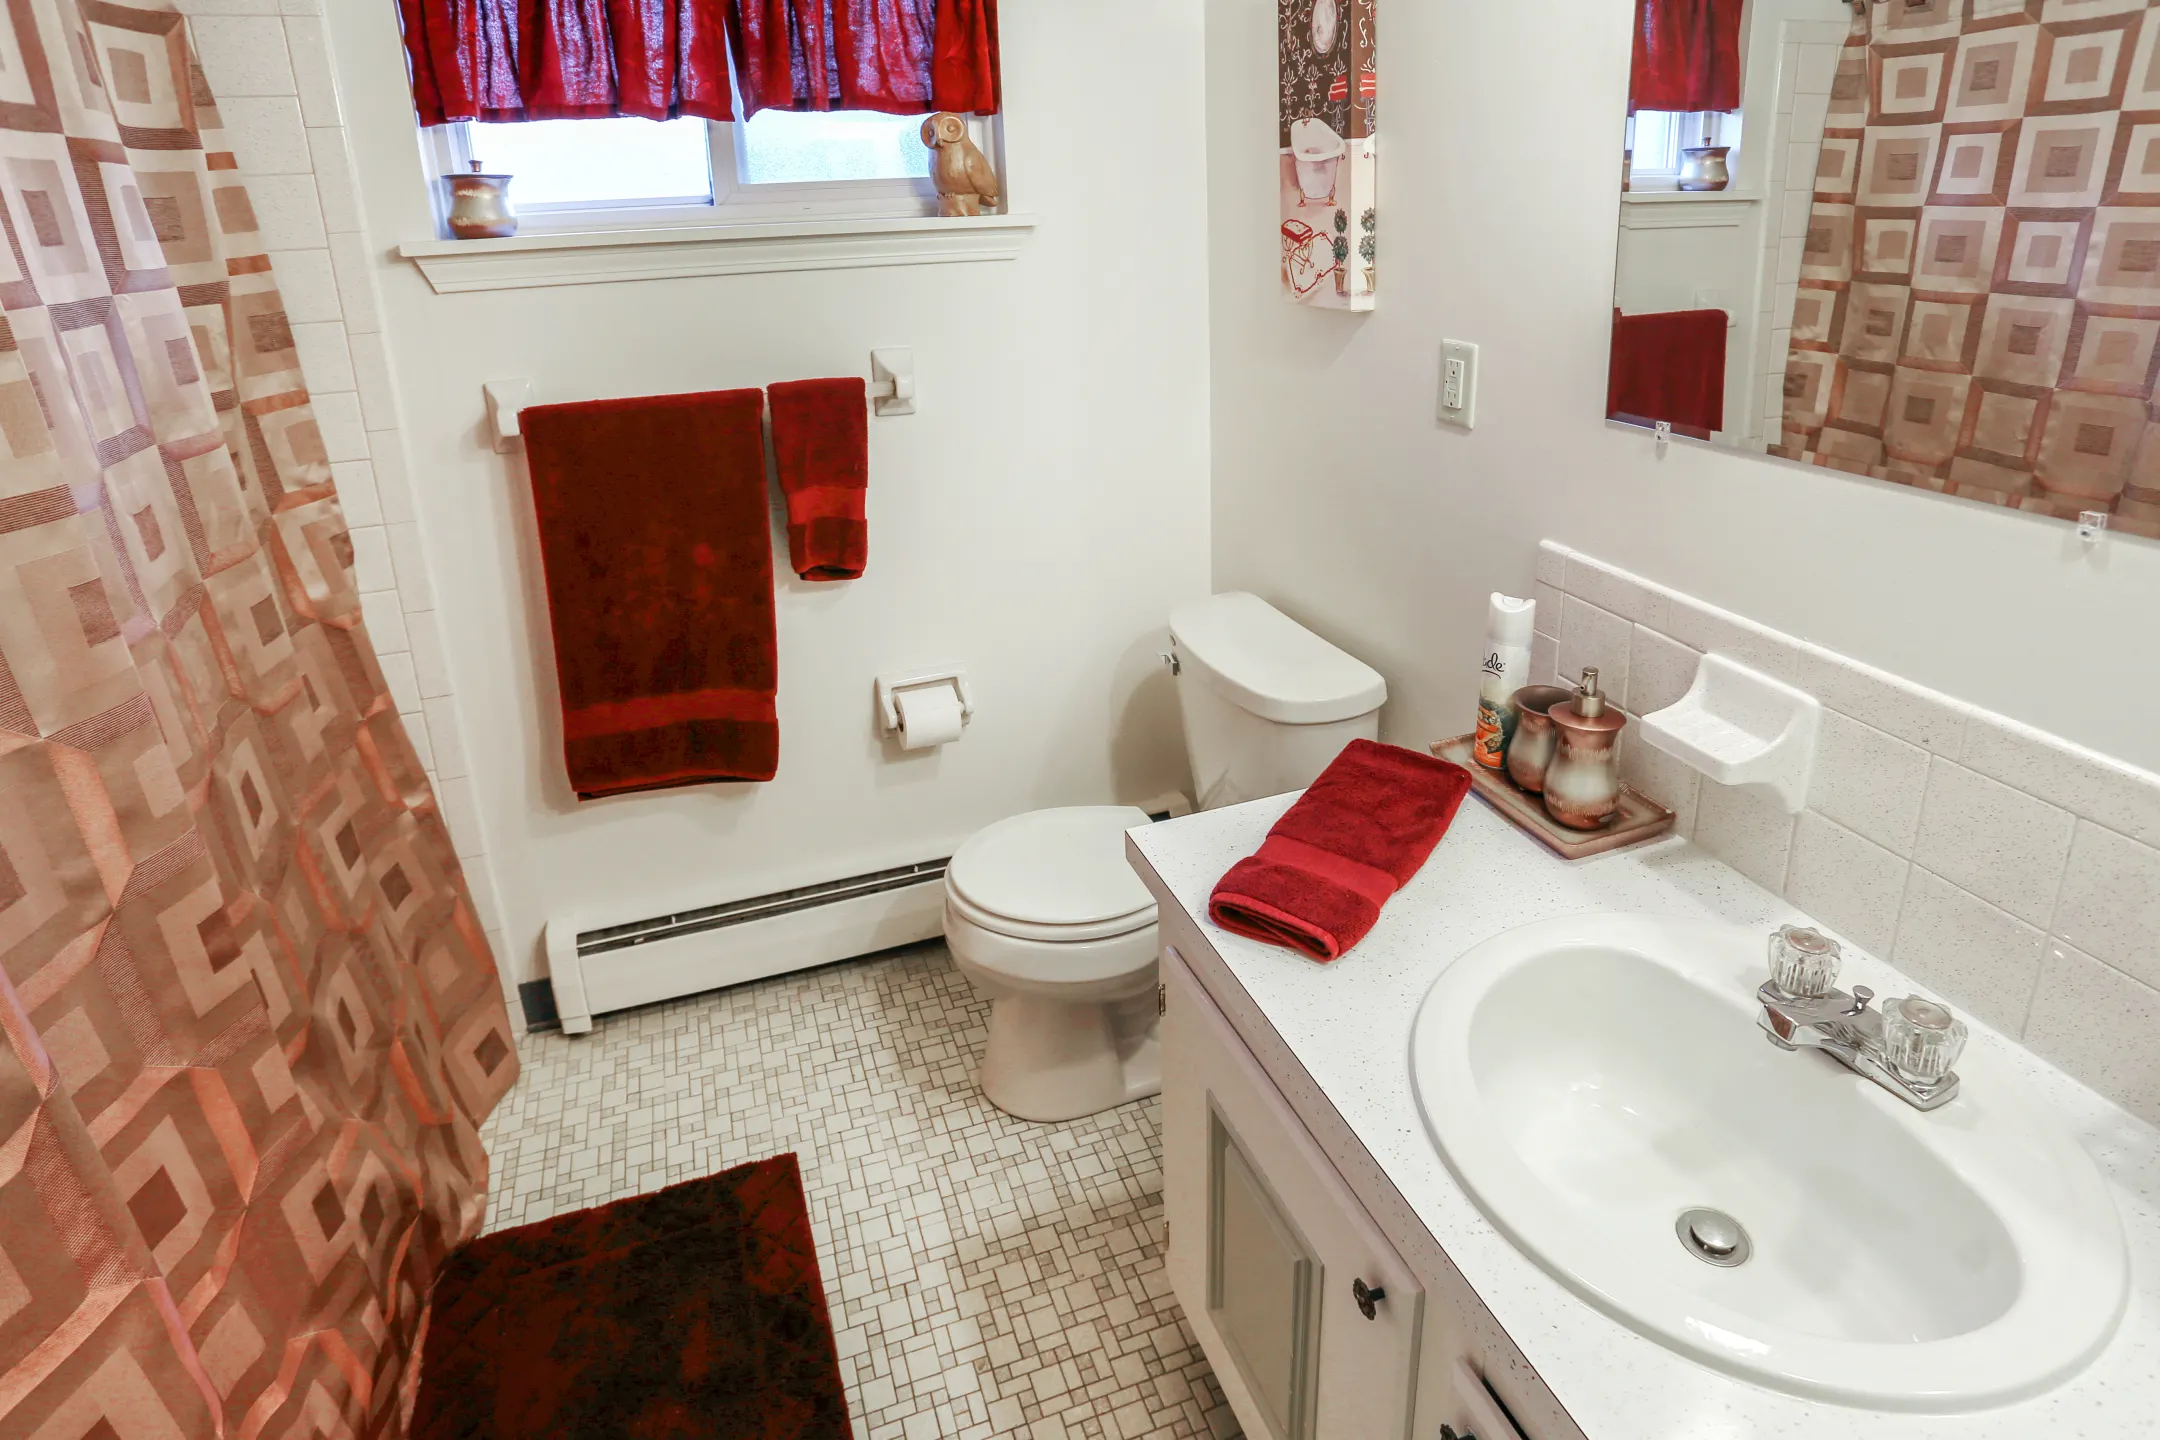 Bathroom - Losson Garden Apartments - Buffalo, NY